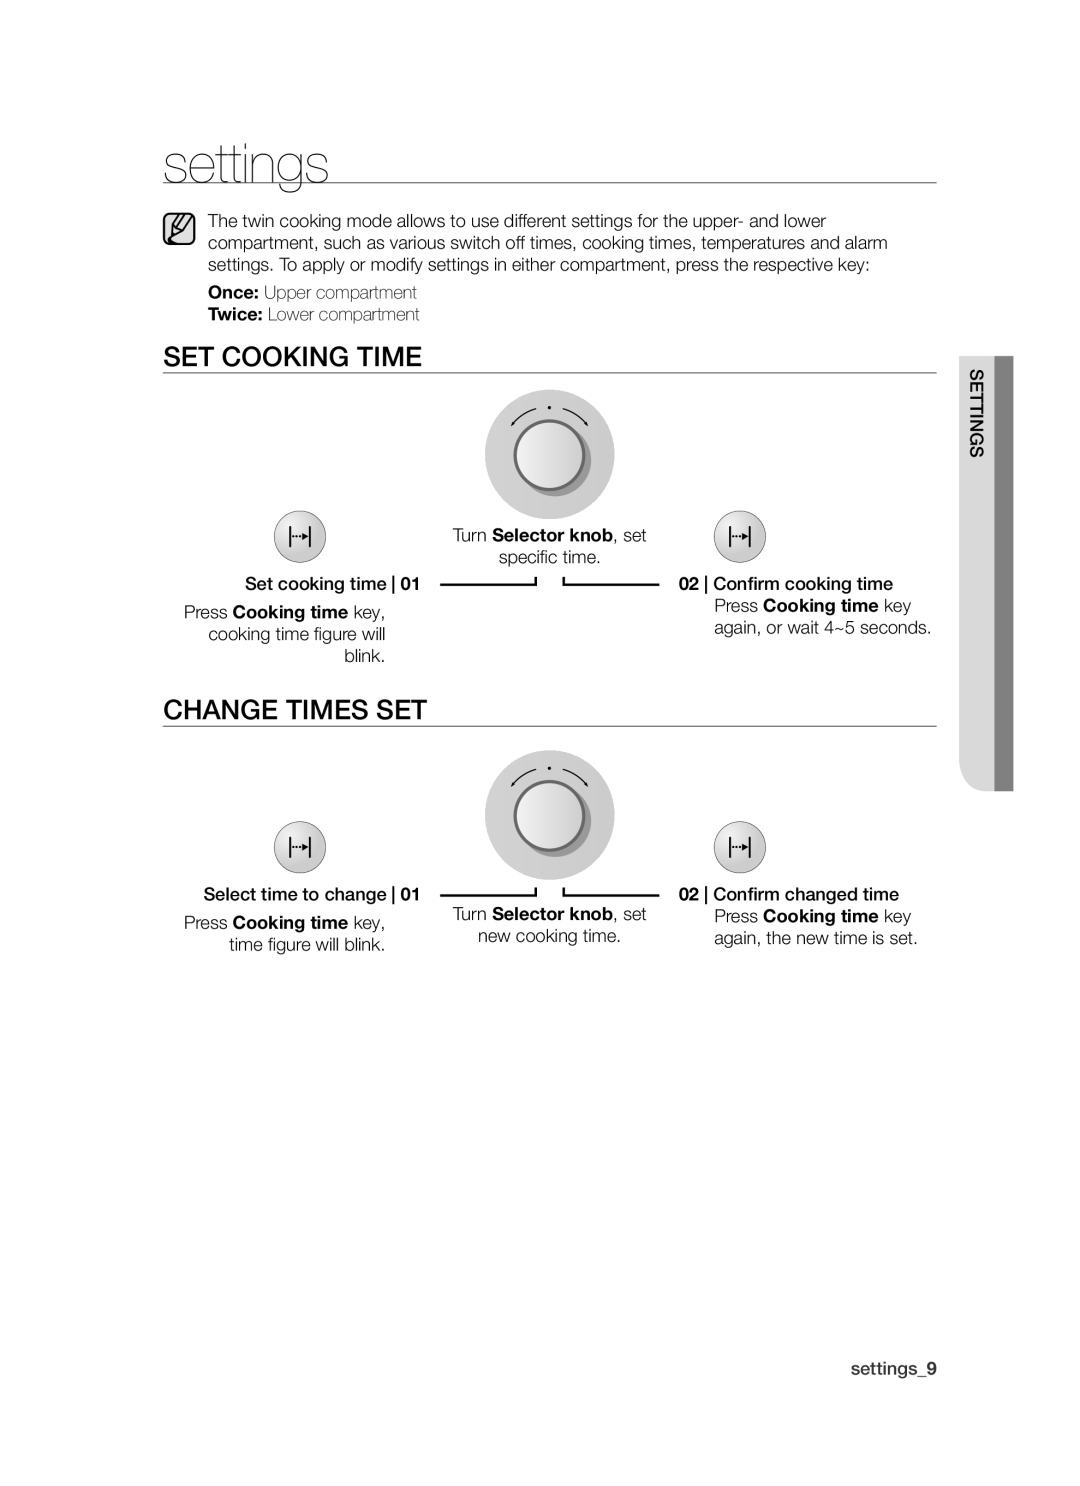 Samsung BT621 Series user manual Set Cooking Time, Change Times Set, settings9 